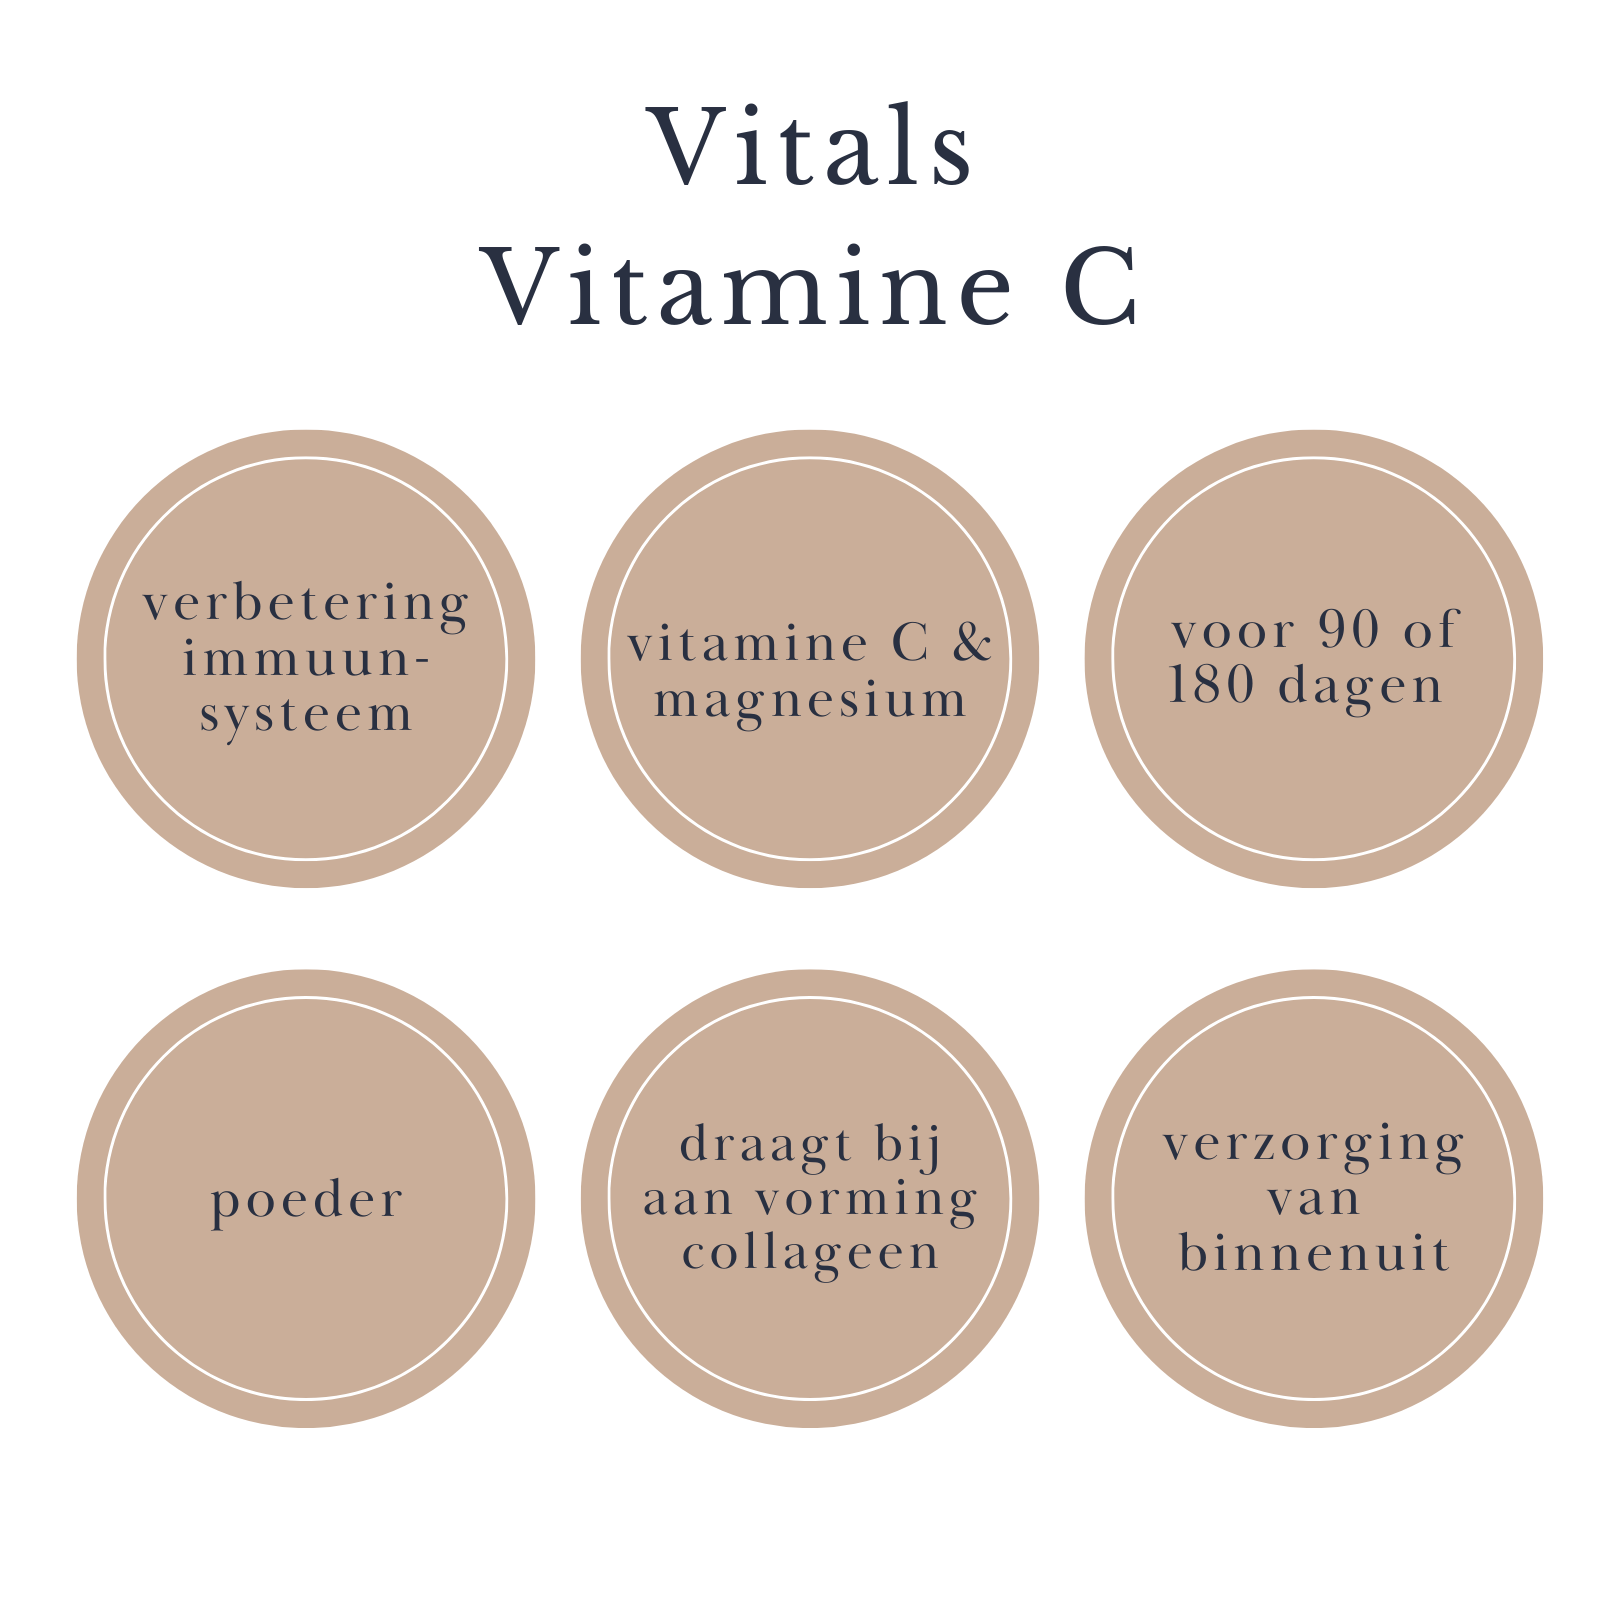 Vitals vitamine C poeder